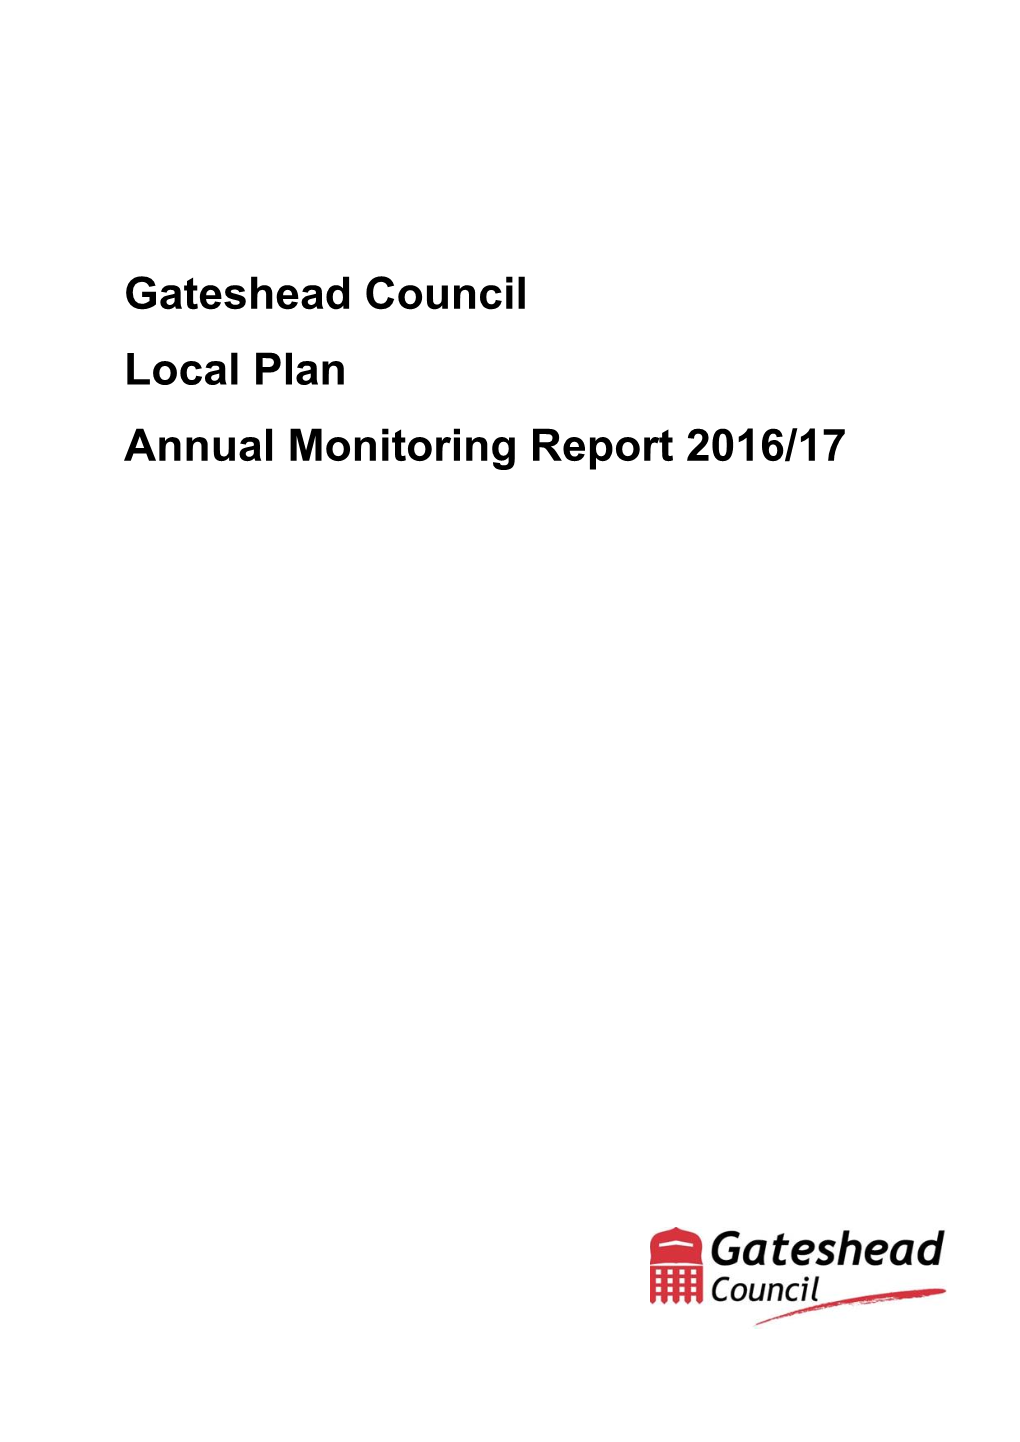 Gateshead Council Local Plan Annual Monitoring Report 2016/17